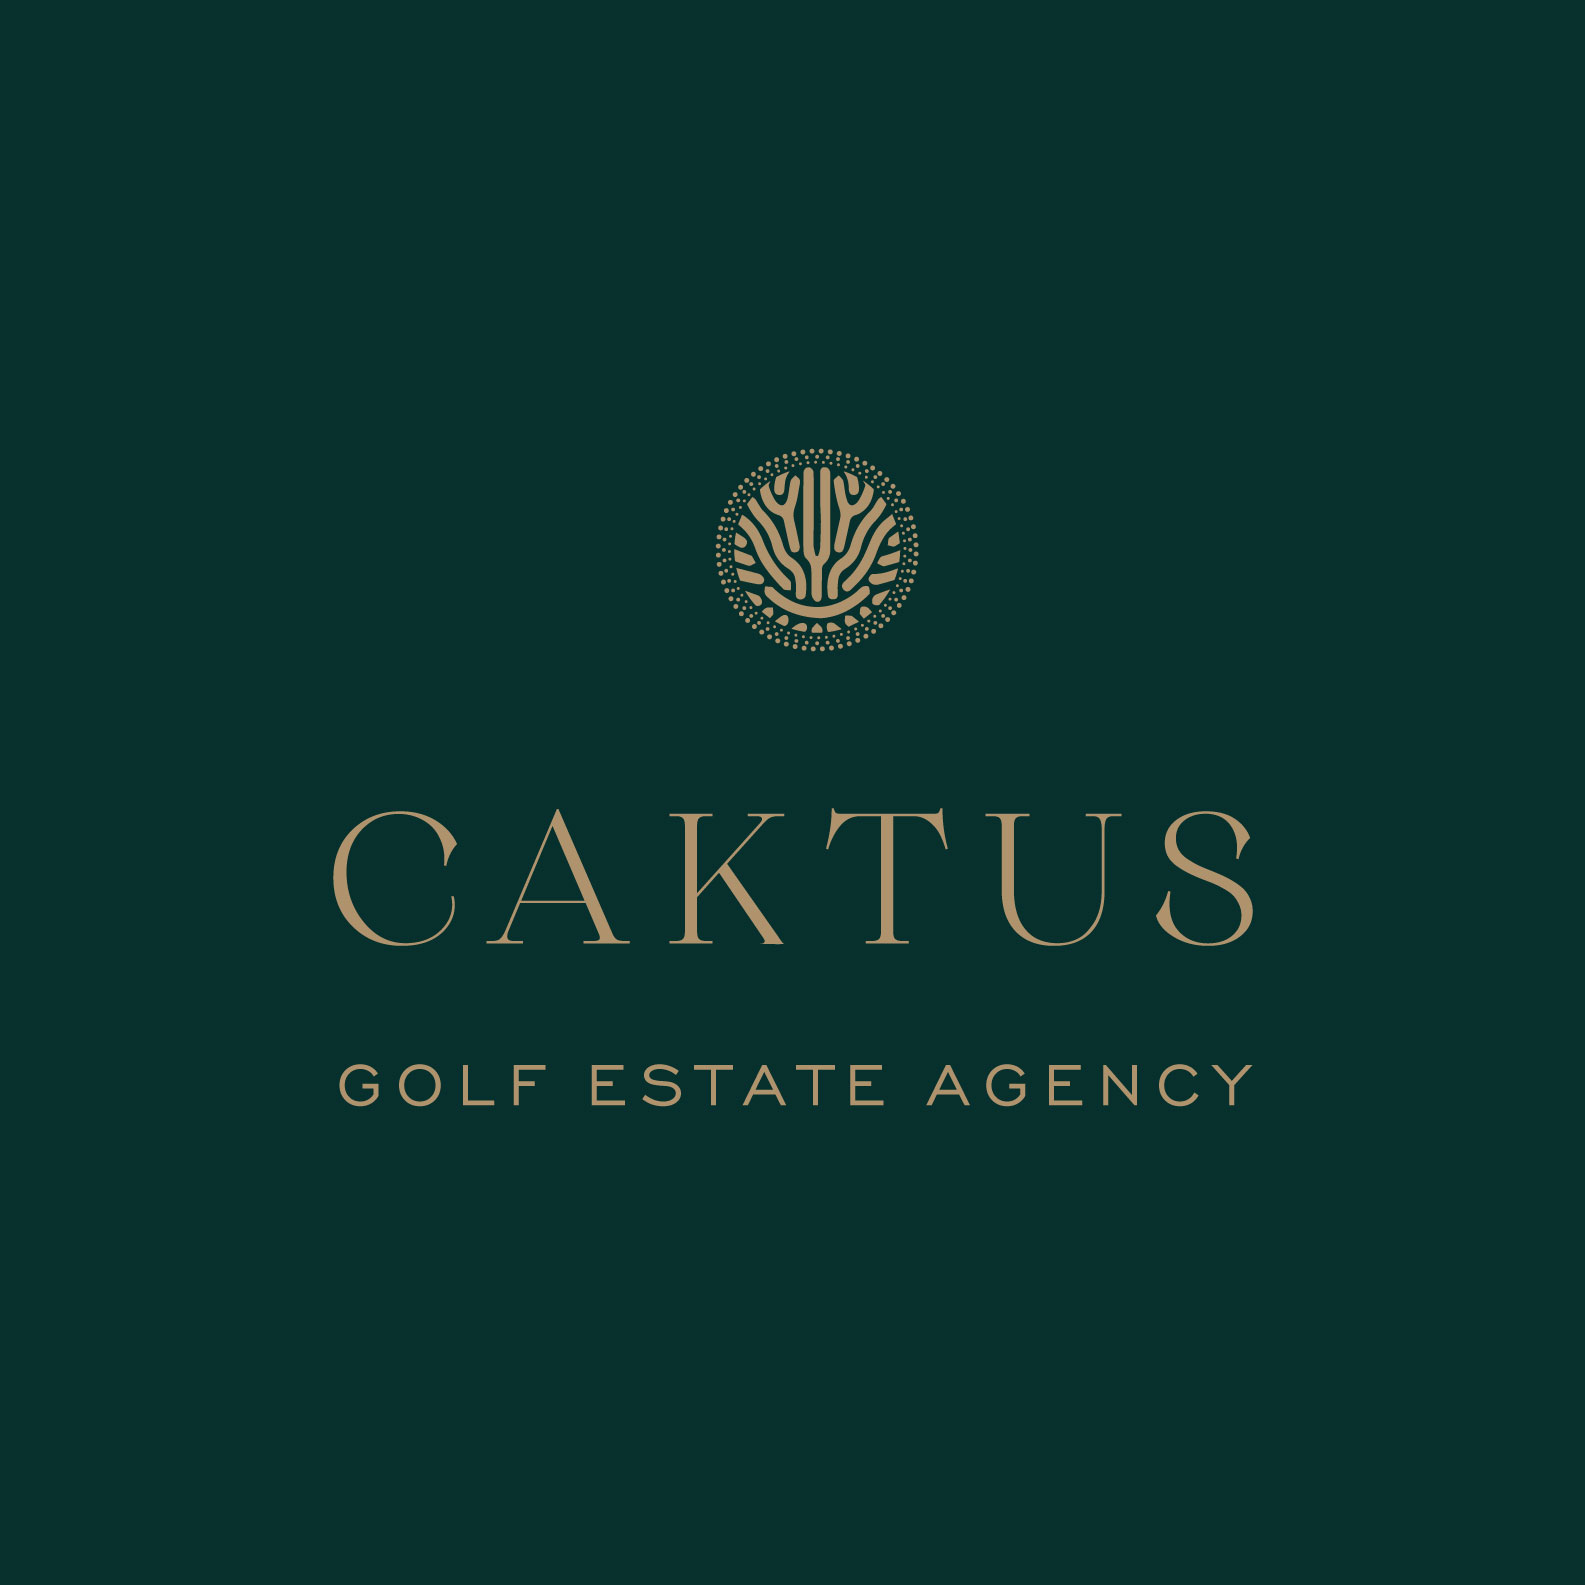 CAKTUS – Golf Estate Agency